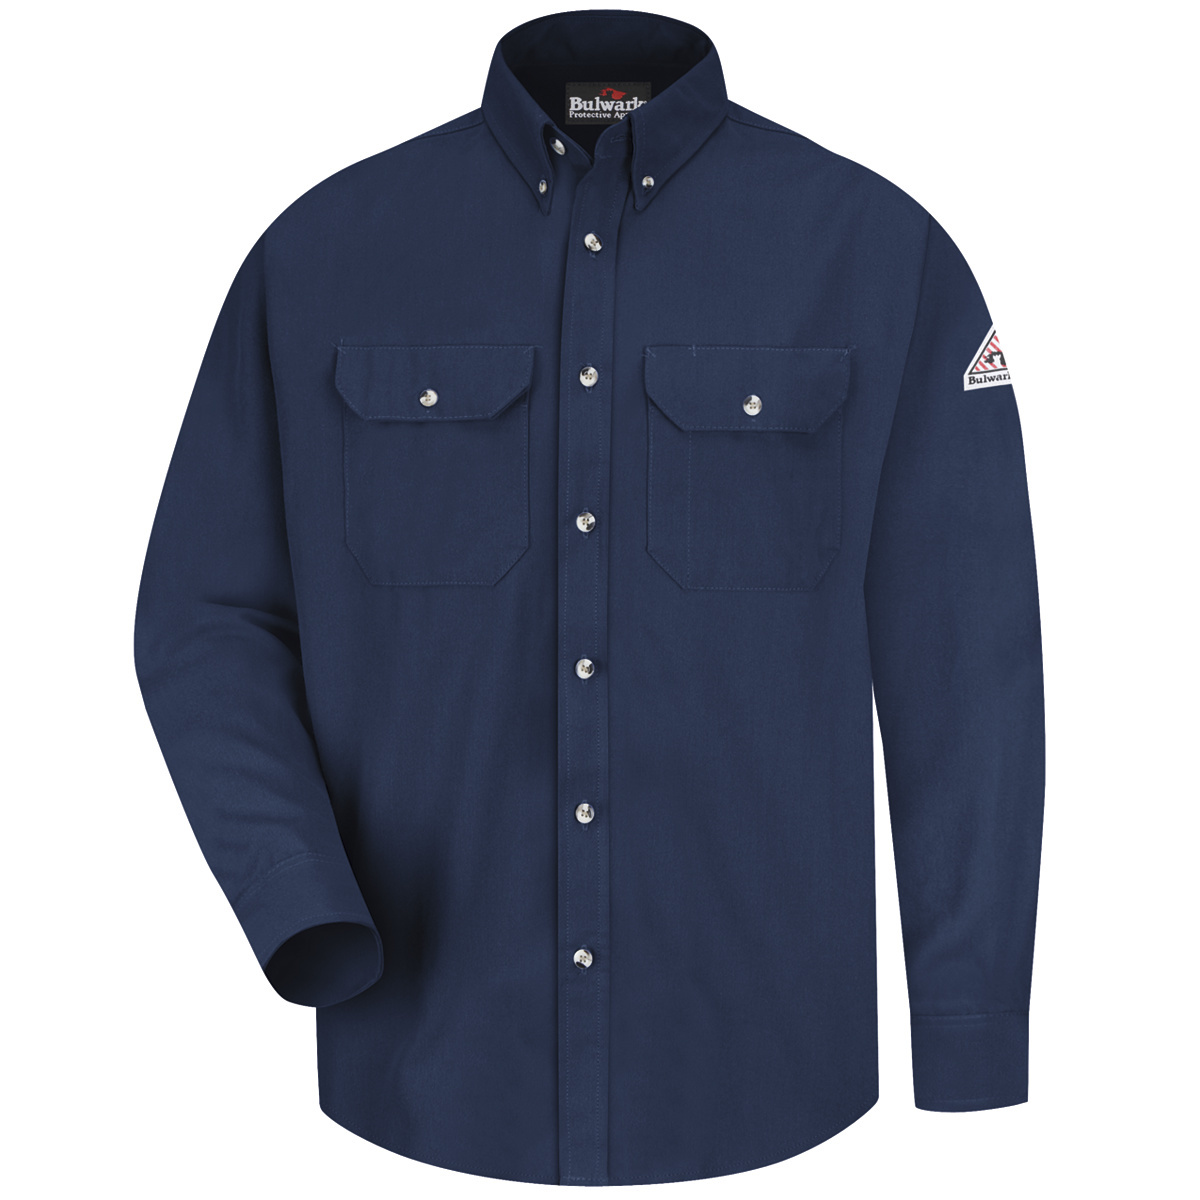 Bulwark® X-Large Tall Navy Blue Modacrylic/Lyocell/Aramid Flame Resistant Dress Uniform Shirt With Button Front Closure